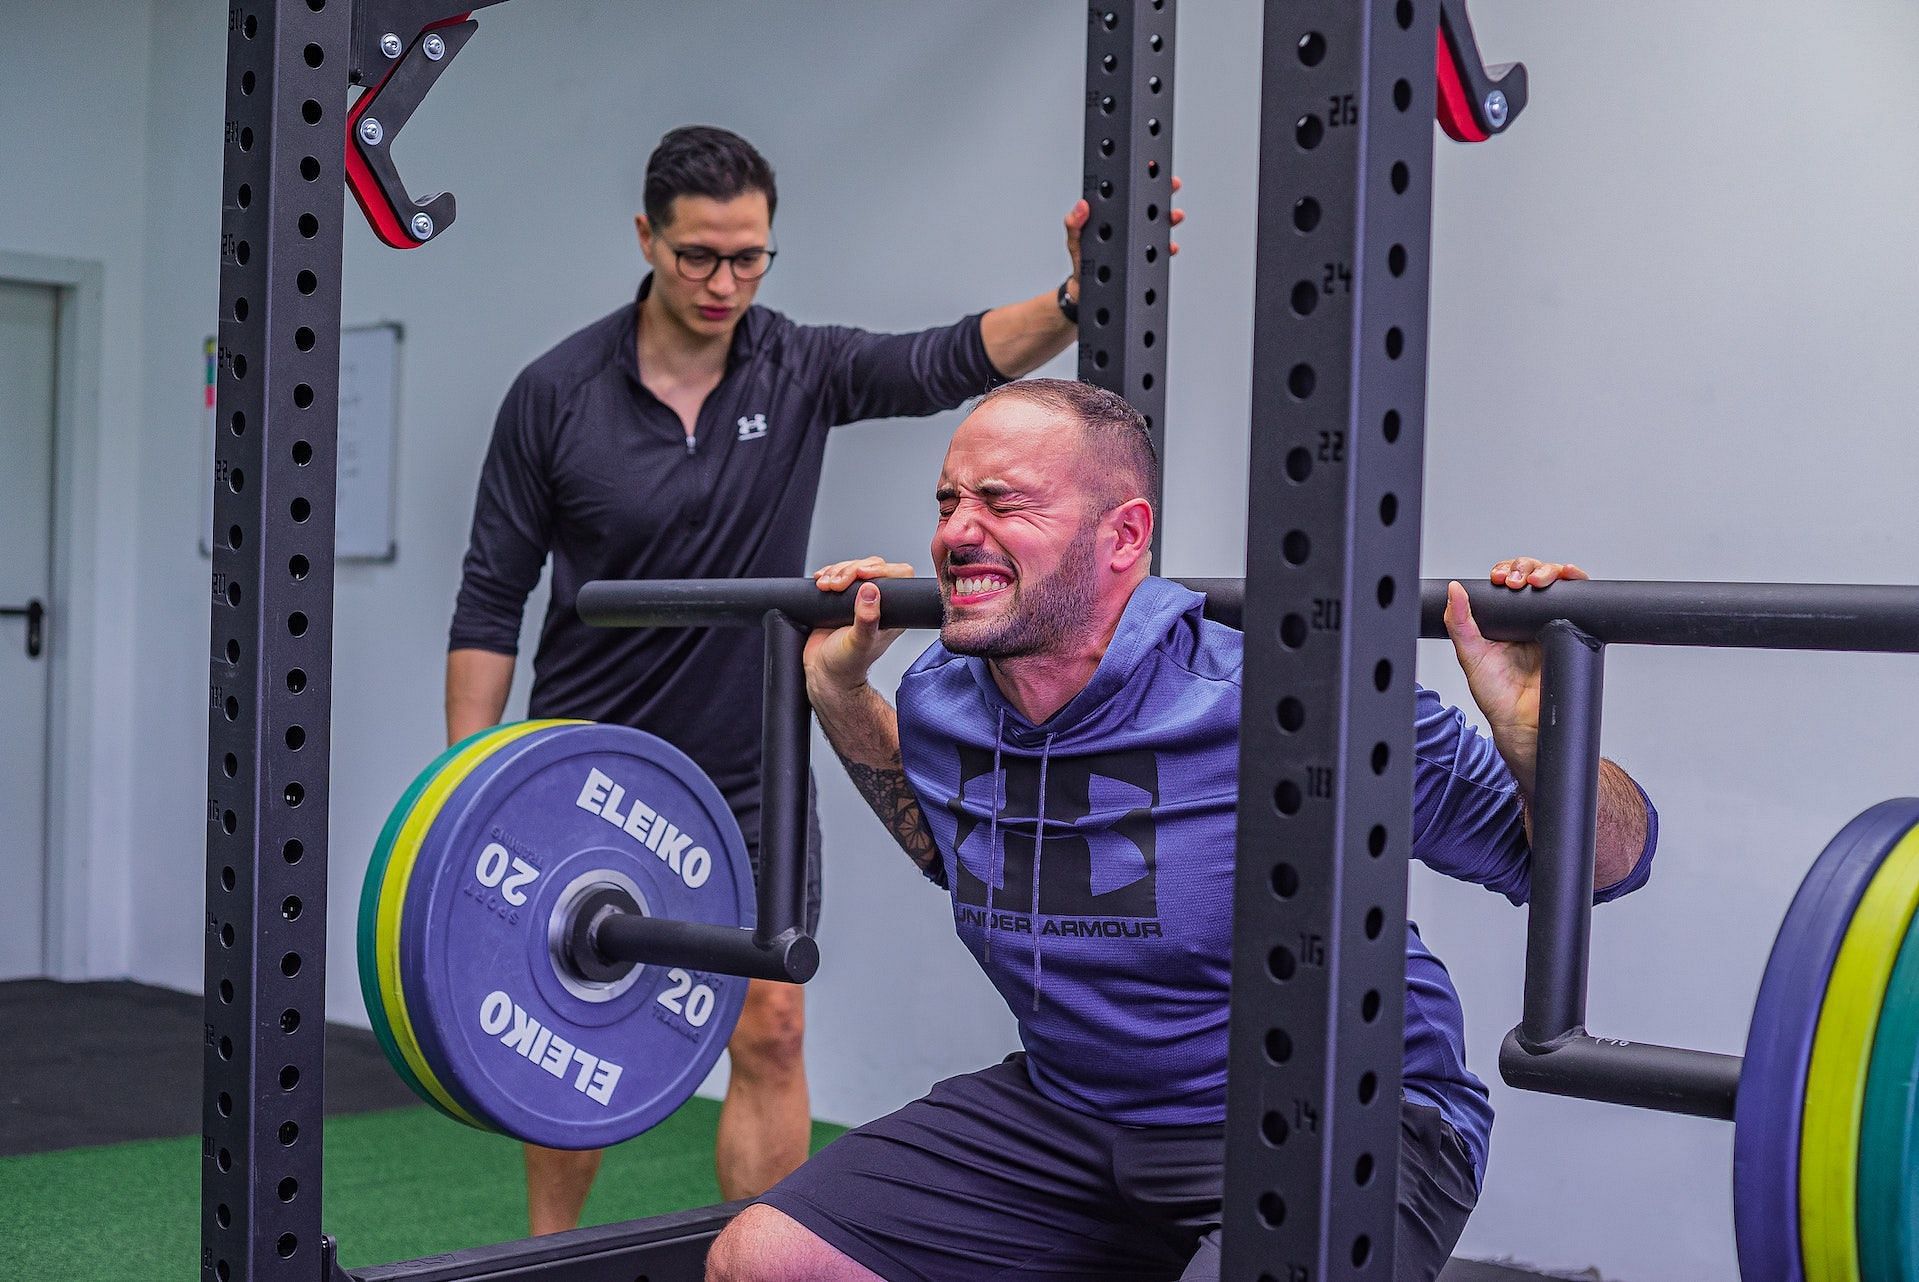 High bar squats build massive lower-body strength. (Photo via Pexels/Justin Luck)